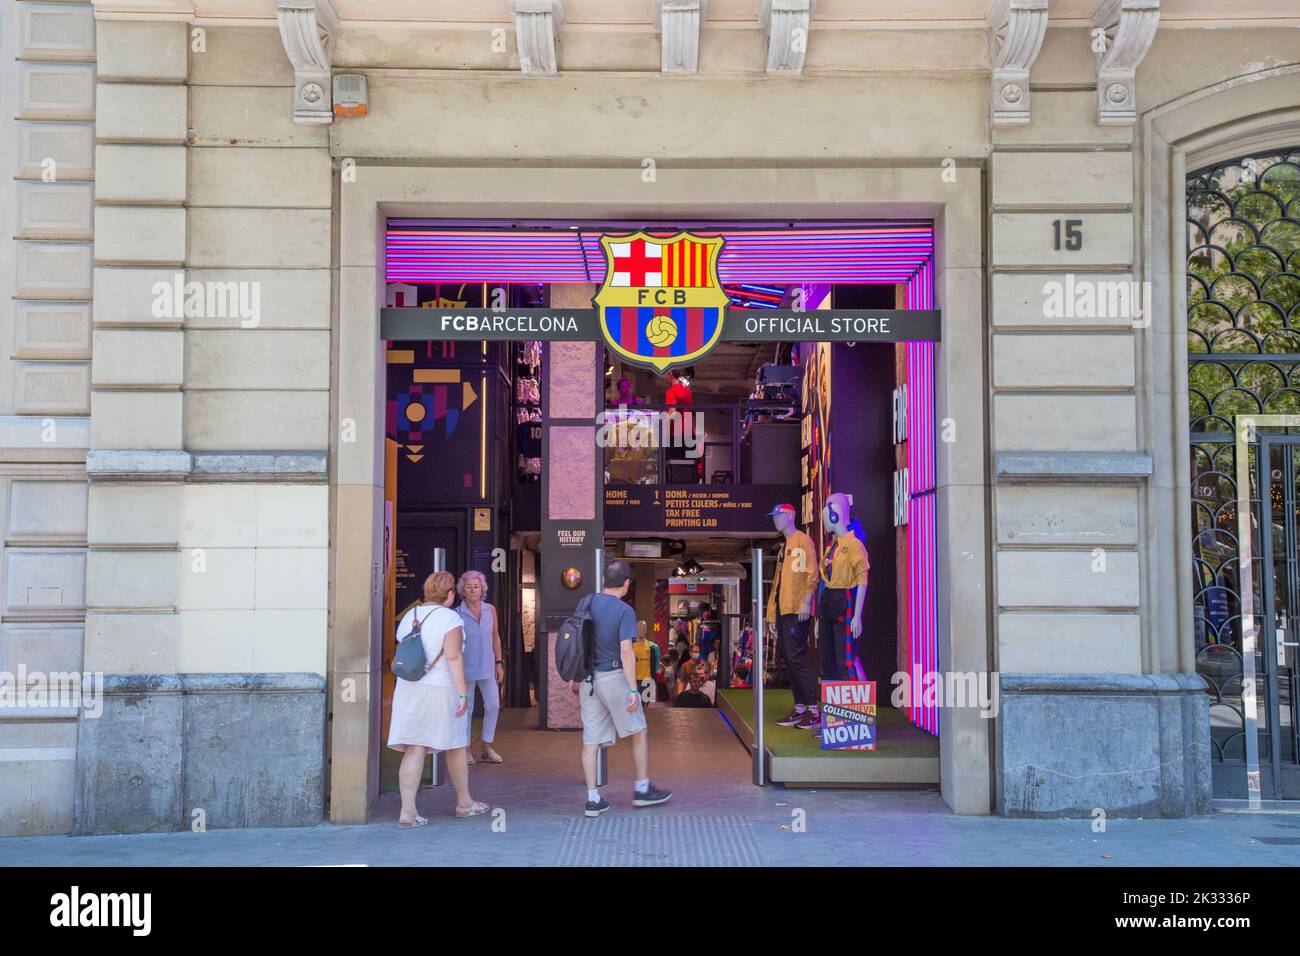 Football club barcelona store fotografías e imágenes de alta resolución -  Alamy